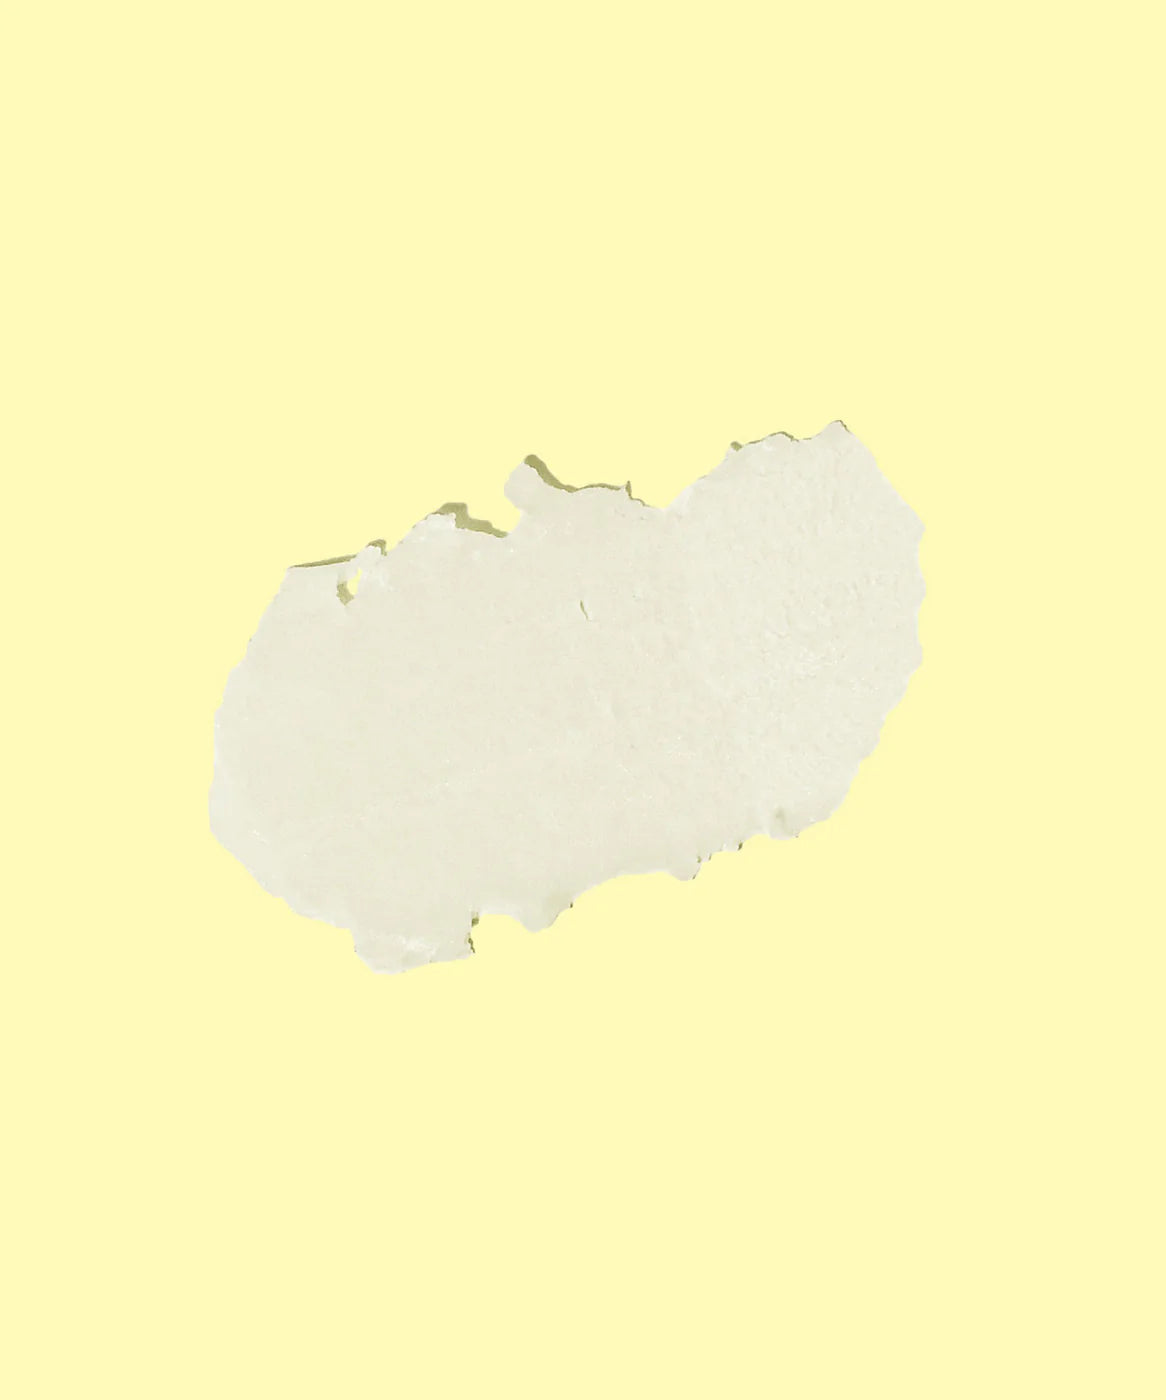 Sunbum - Original SPF 30 Sunscreen Lip Balm - Mango